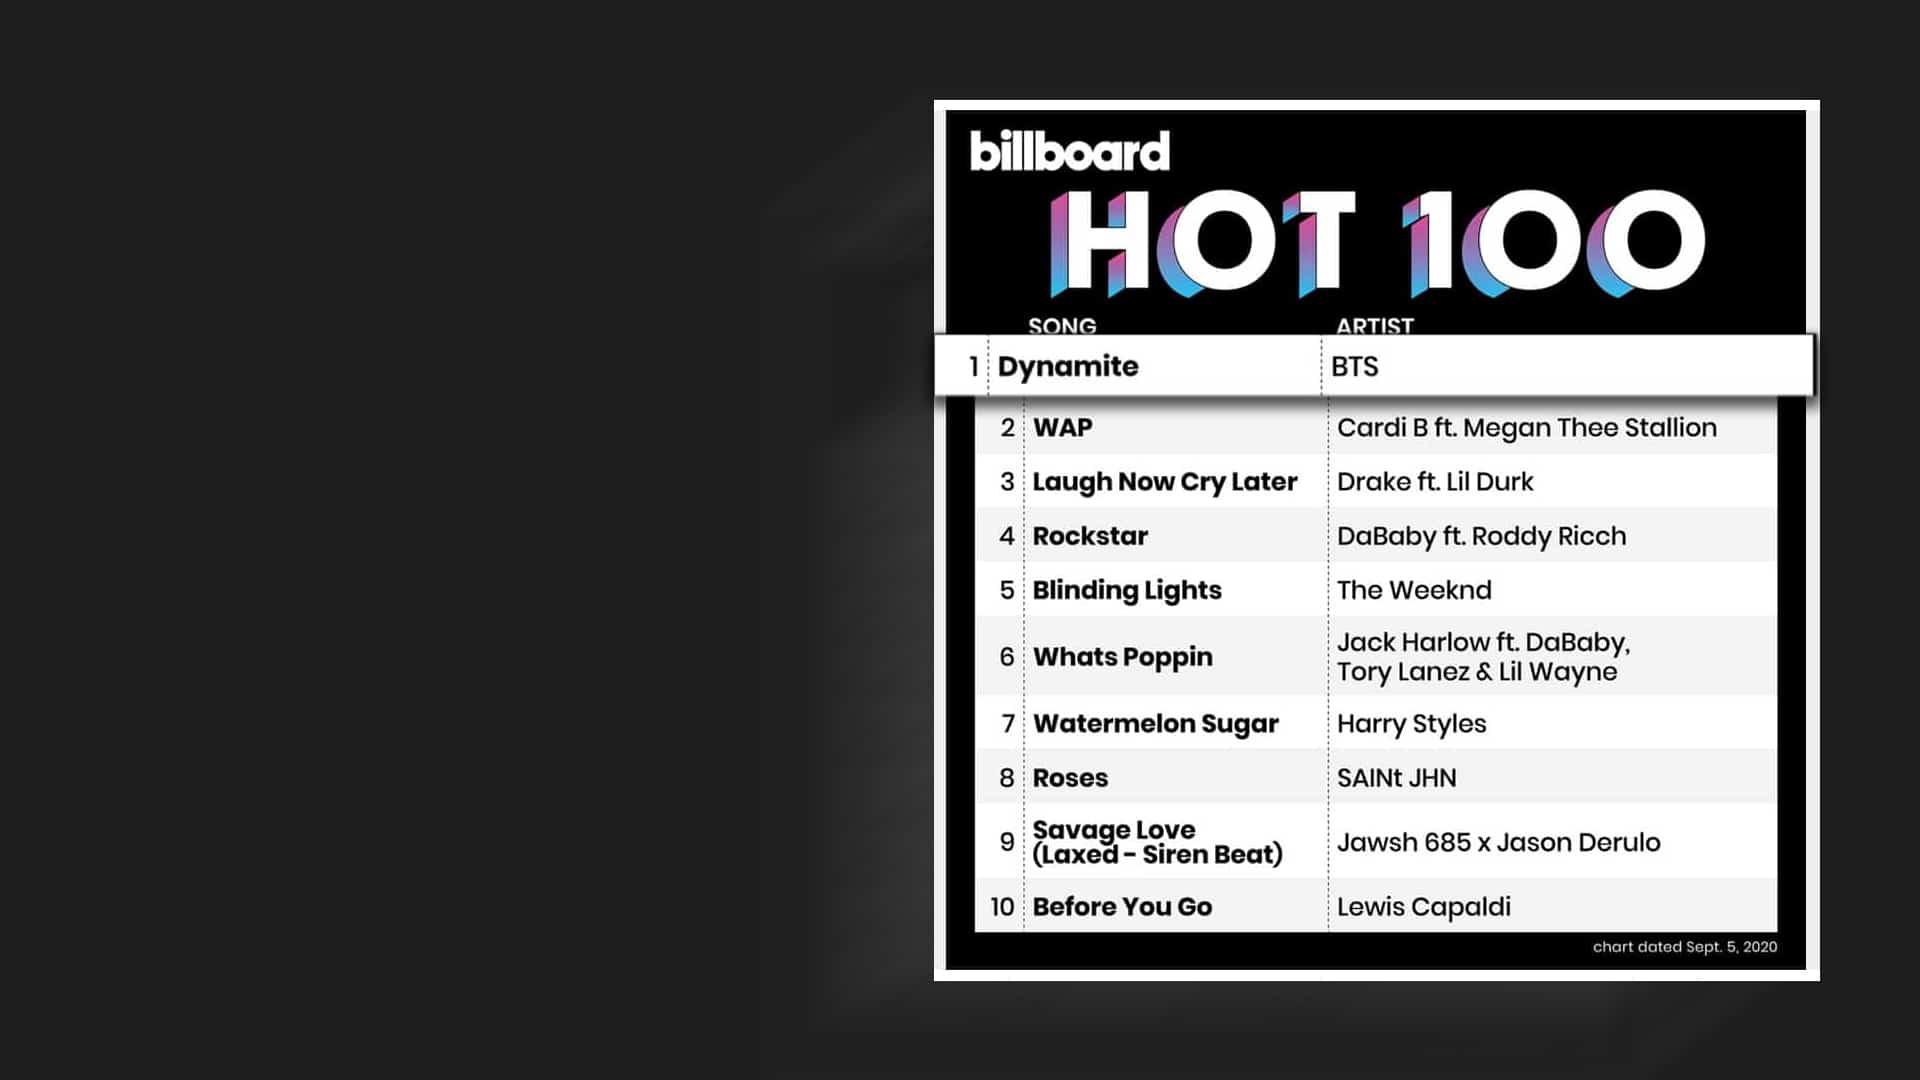 bts-number-one-on-billboard-hot-100